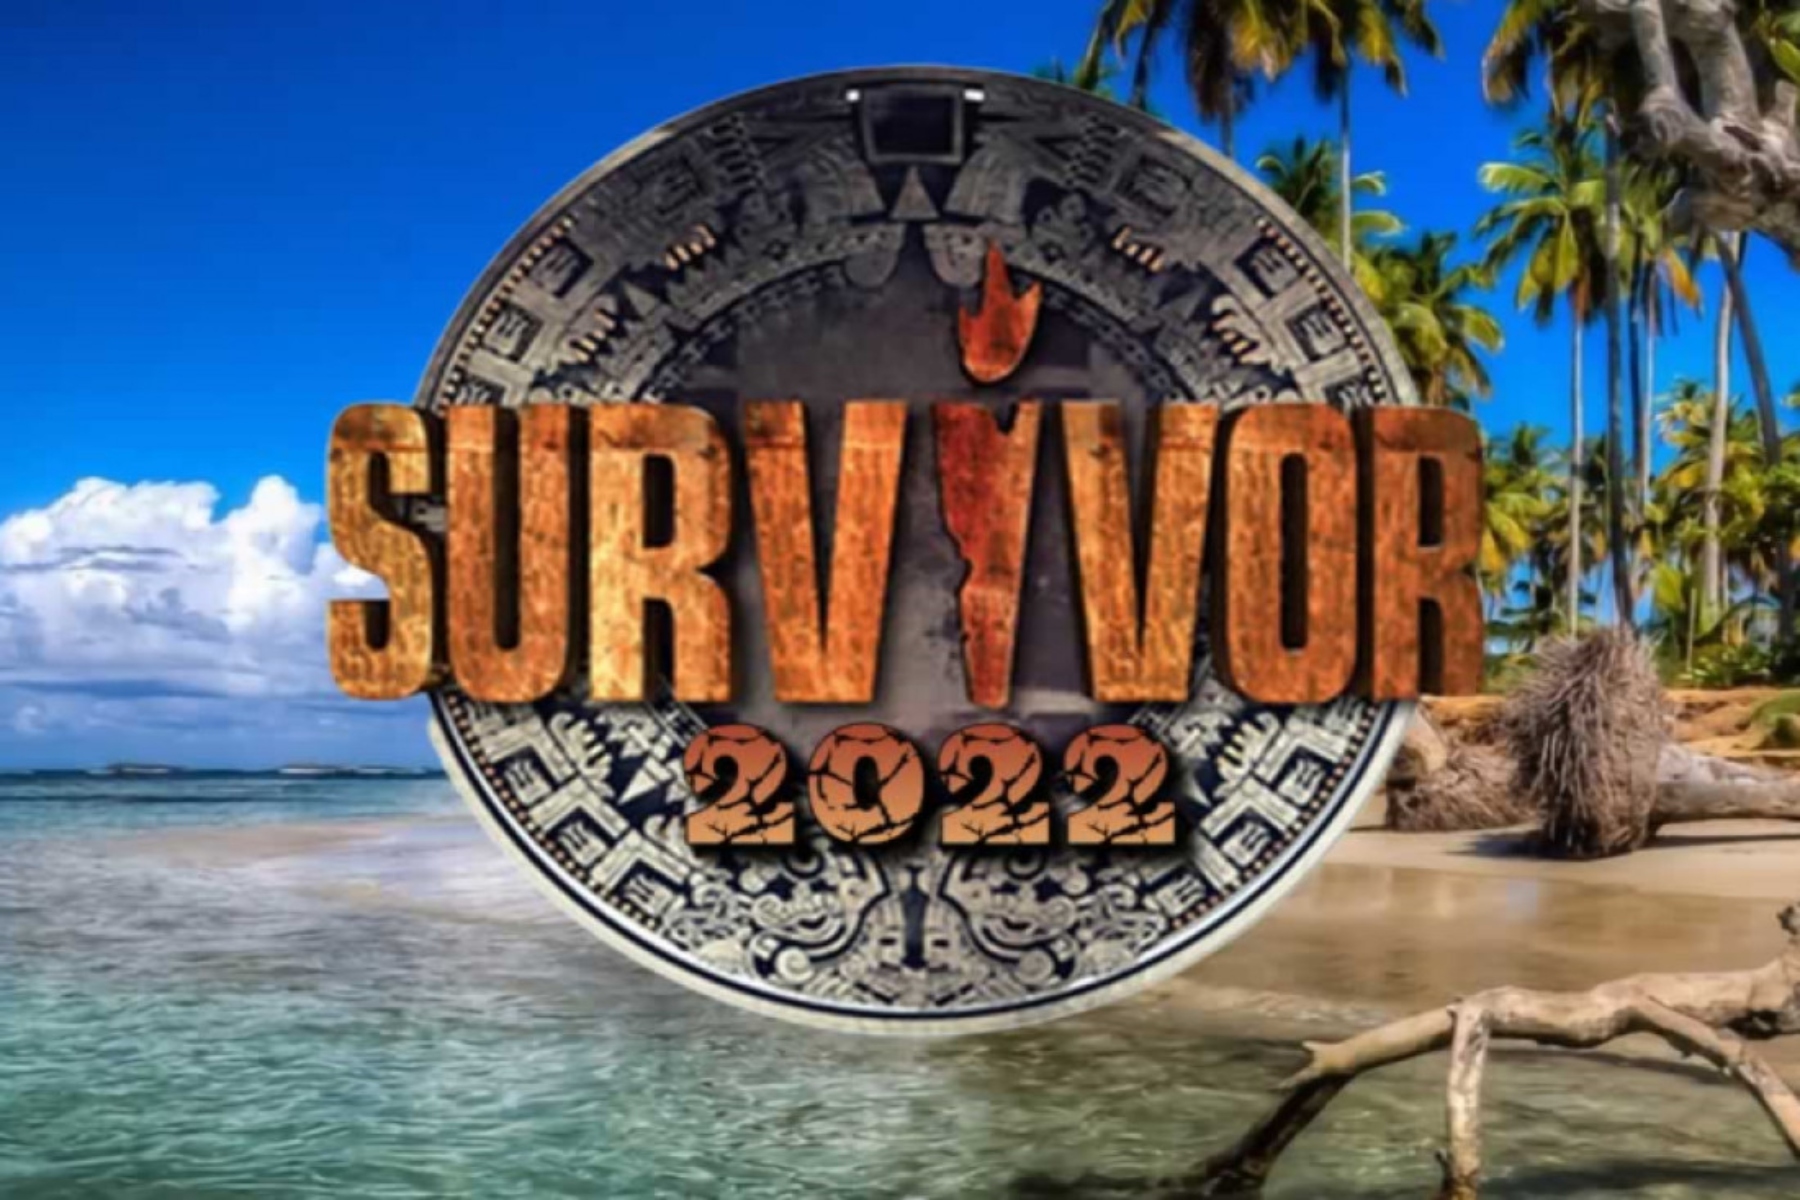 Survivor 06/02: “Φτάνει πια με την υστερία” πριν τον πρώτο αγώνα της ασυλίας [trailer]